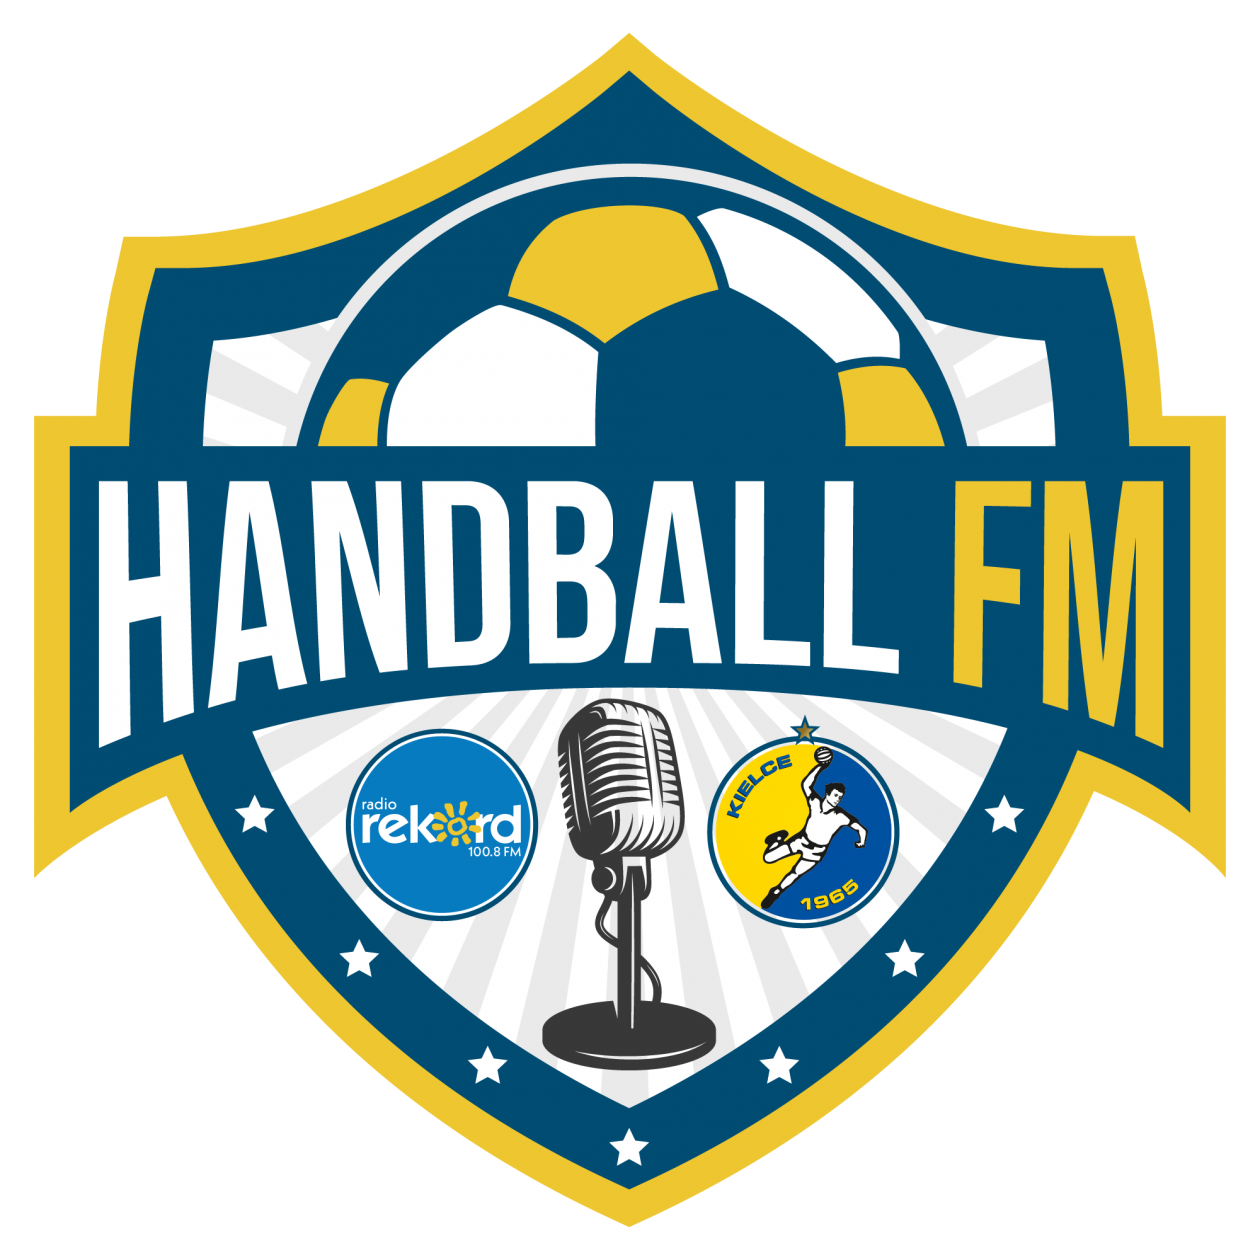 Handball FM odc. 4 Mateusz Kornecki
